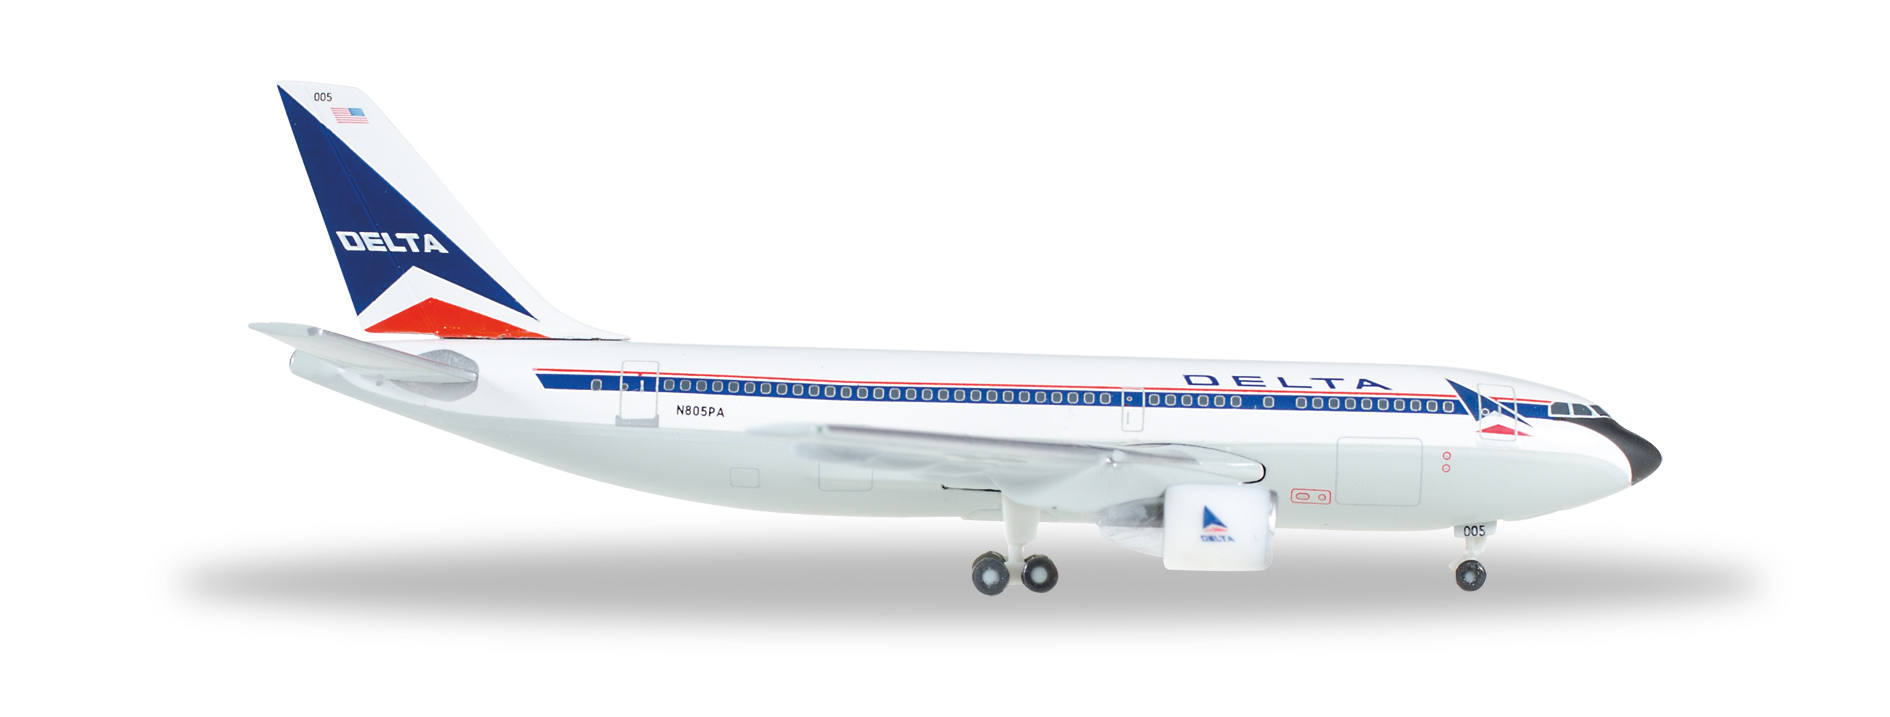 Airbus A310-200 Delta Air limitierte Wings Club Sonderserie